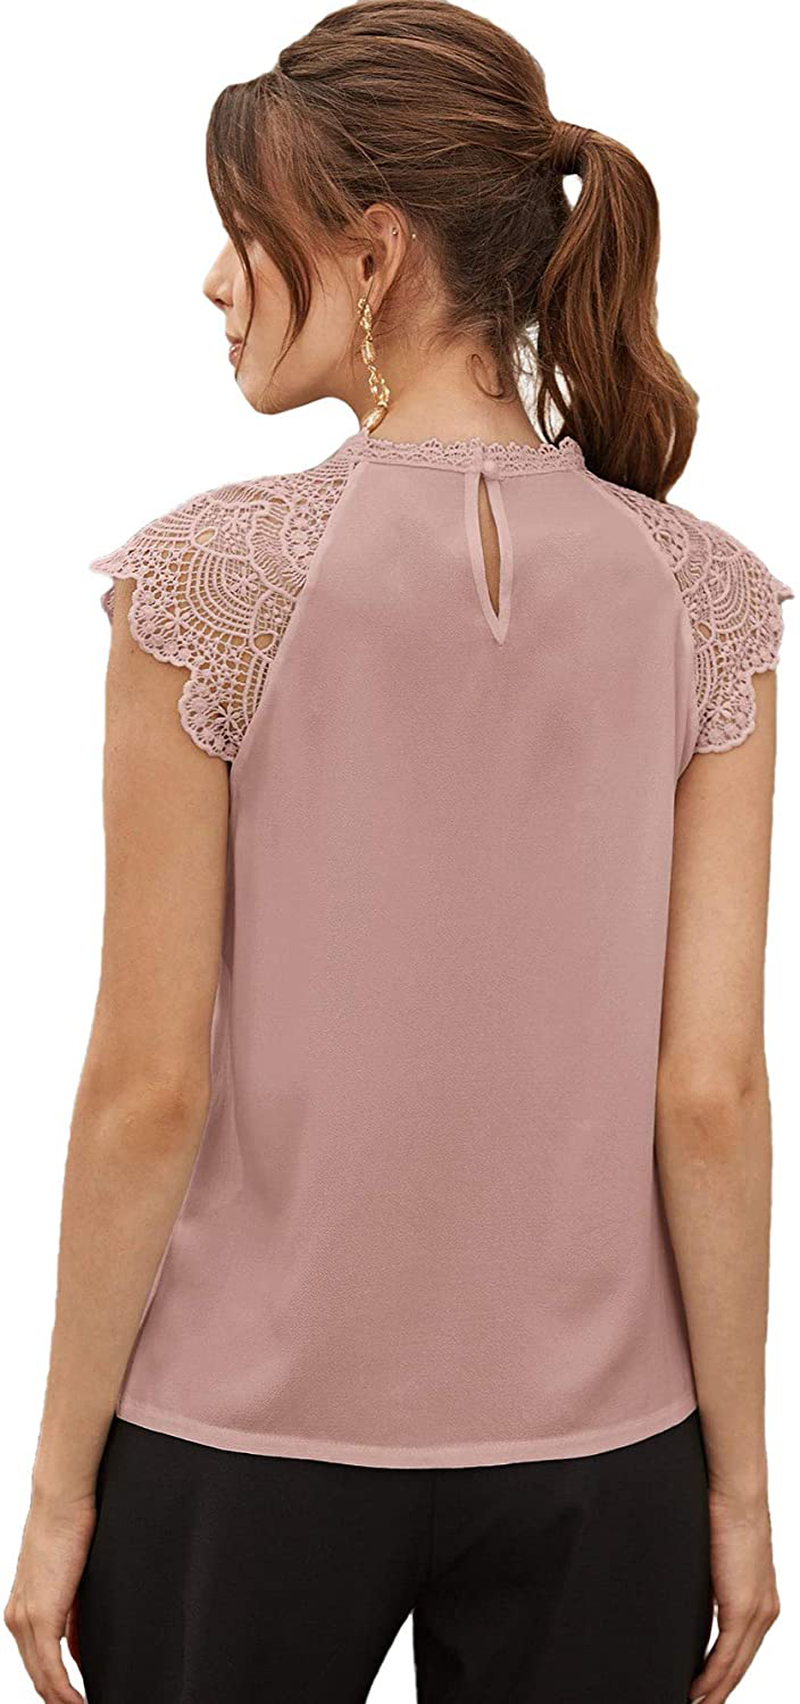 SheIn Women's Elegant Cap Sleeve Keyhole Contrast Lace Blouses Tops